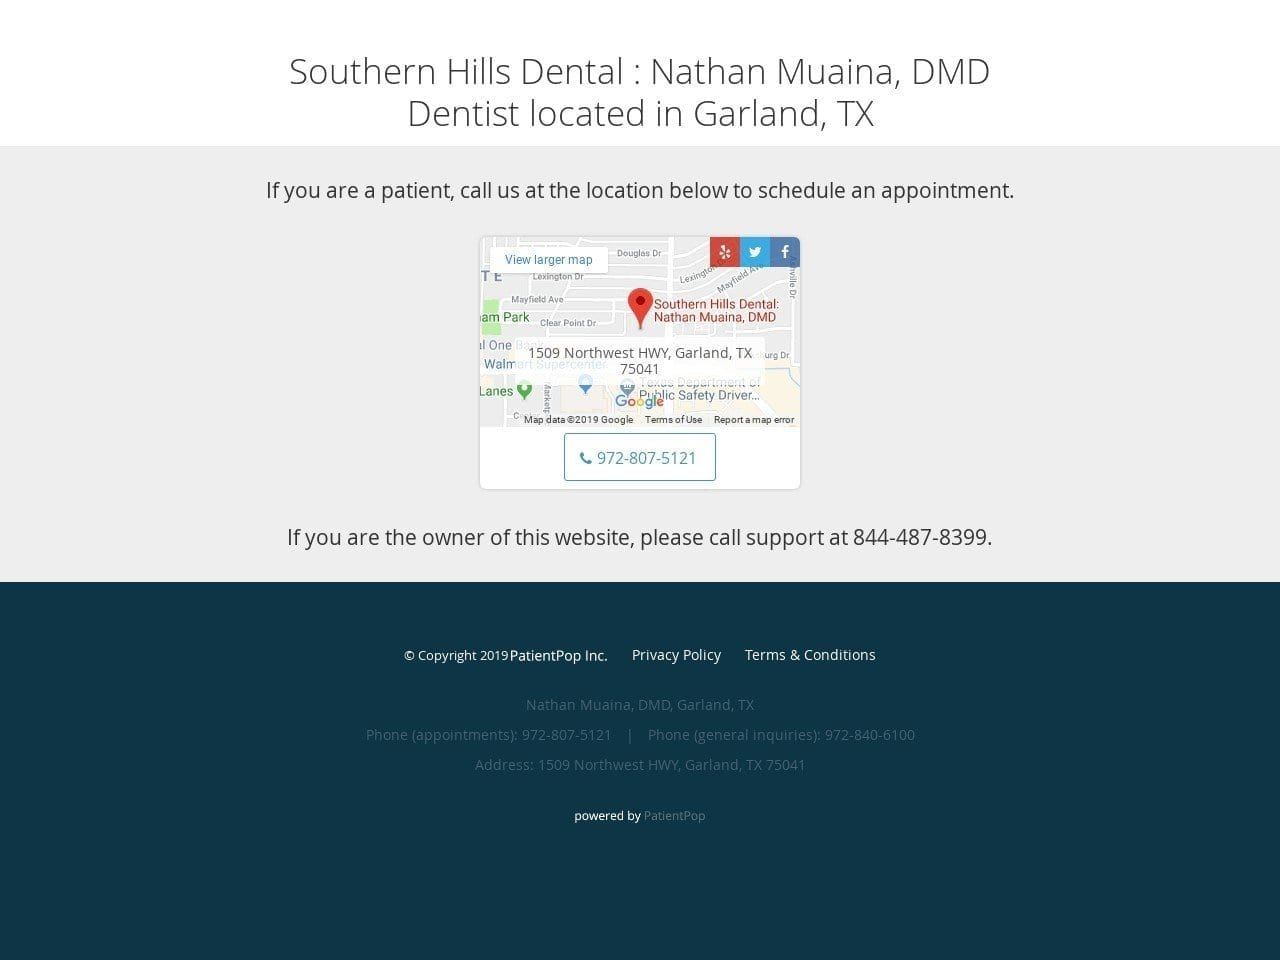 Southern Hills Dental Dr. Nathan K. Muaina Website Screenshot from sohillsdental.com